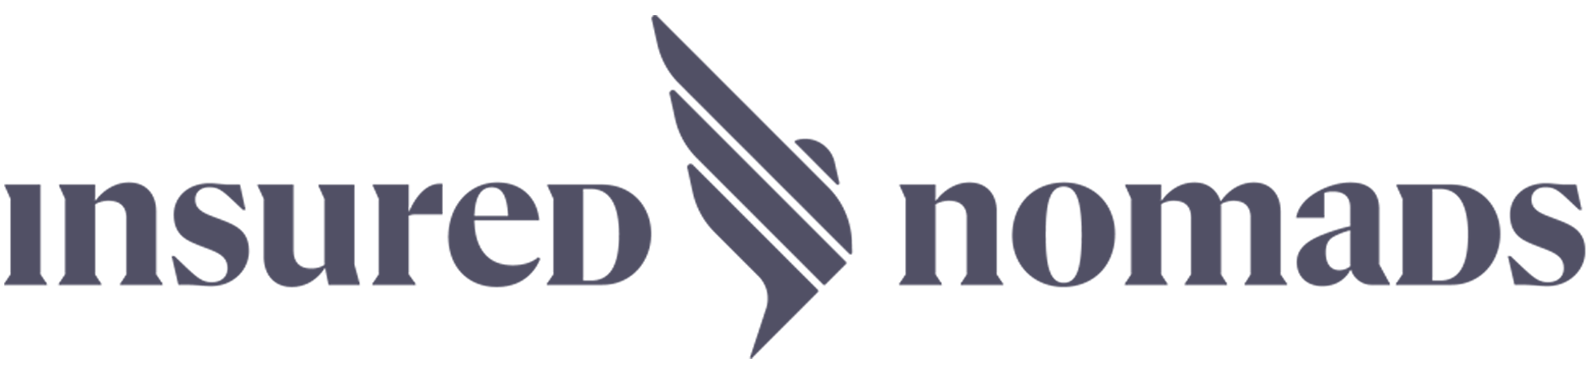 insured nomads logo